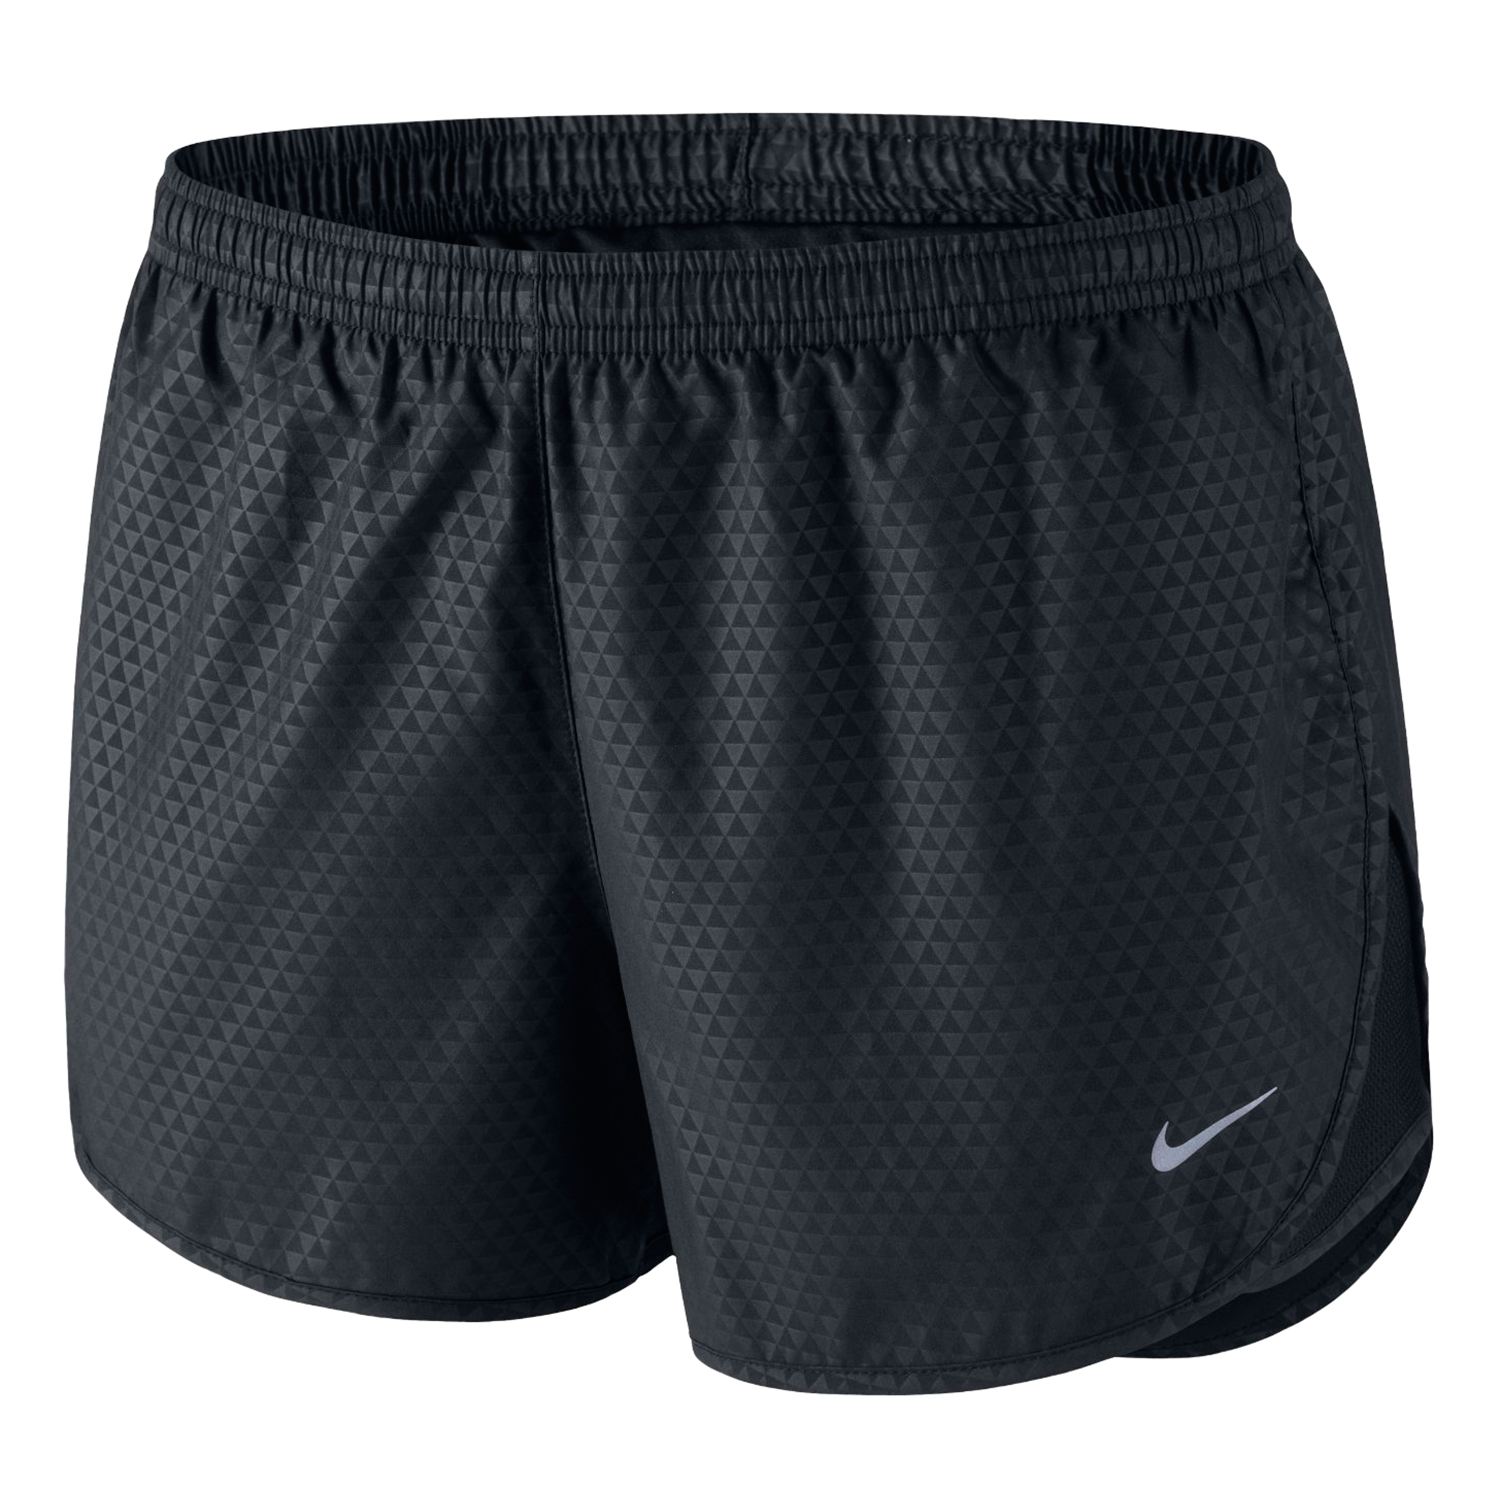 Gym shorts. Шорты беговые Nike Dri Fit. Шорты Nike Dri-Fit Classic, черный. Шорты Nike Dri Fit женские. Шорты Nike dm6519-886.